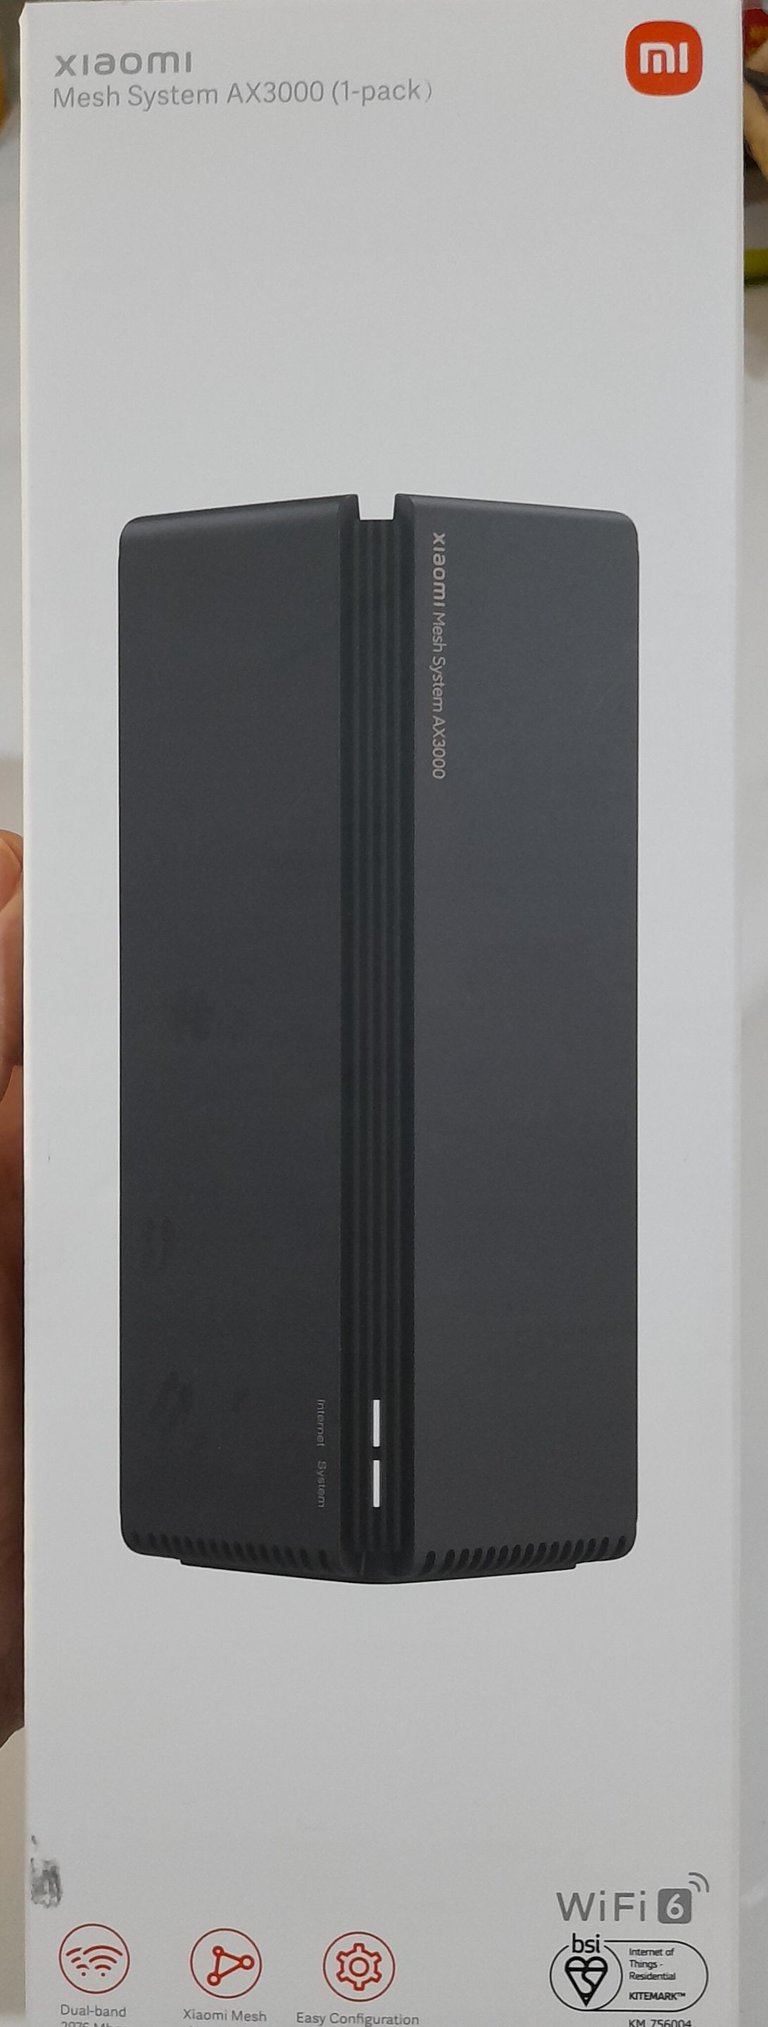 Xiaomi Mesh System AX3000 : unboxing 